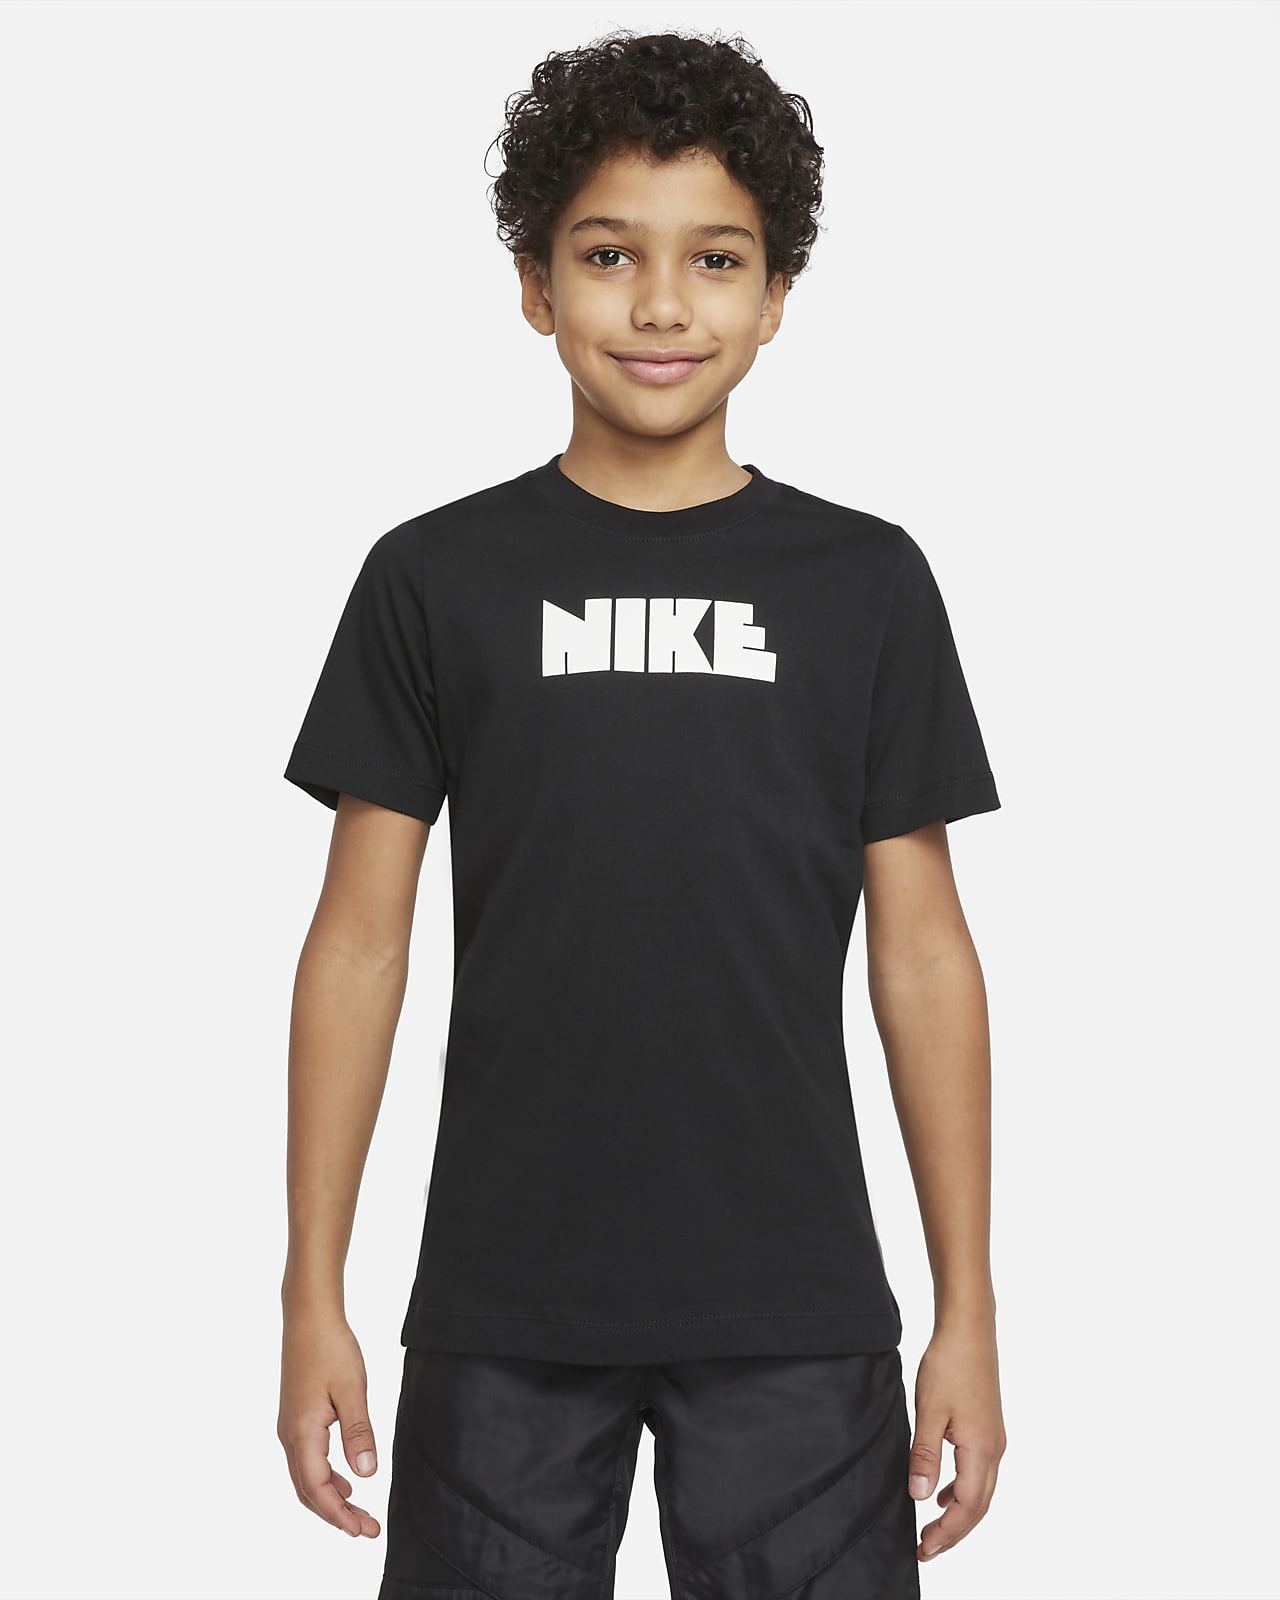 Nike Sportswear Circa 72 Big Kids' T-Shirt